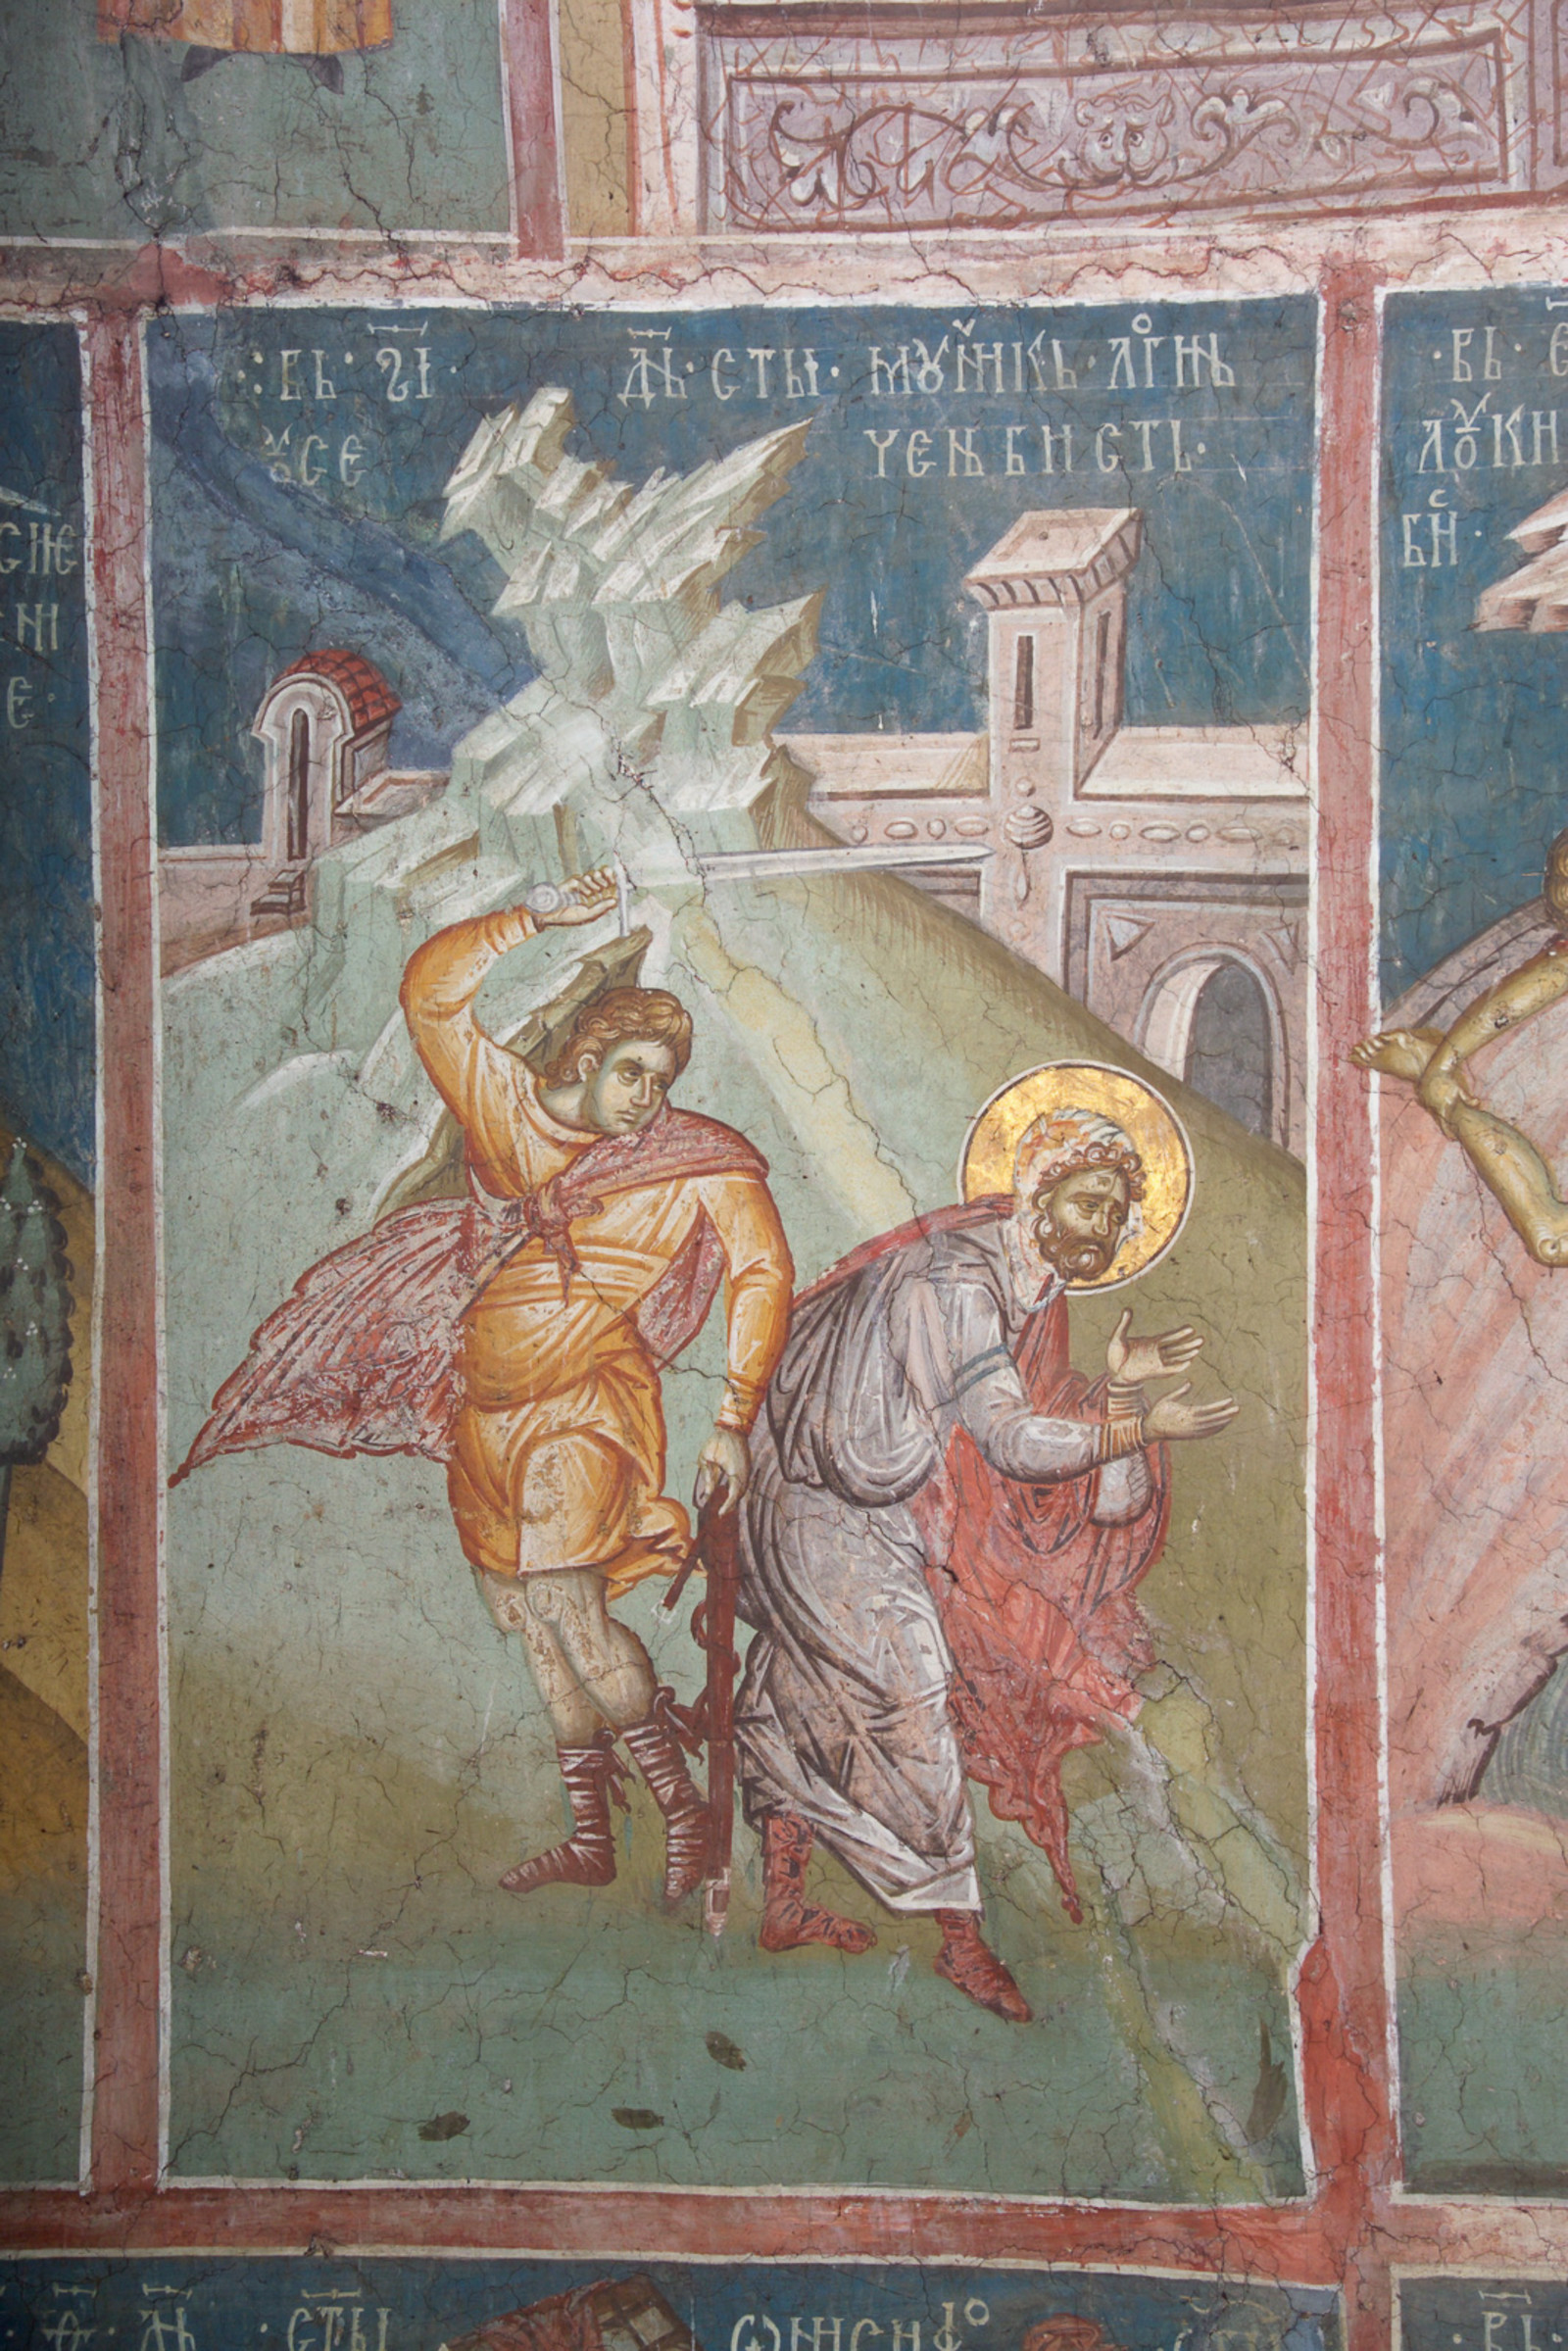 7II-5 October 16 - St. Longinus (scene)